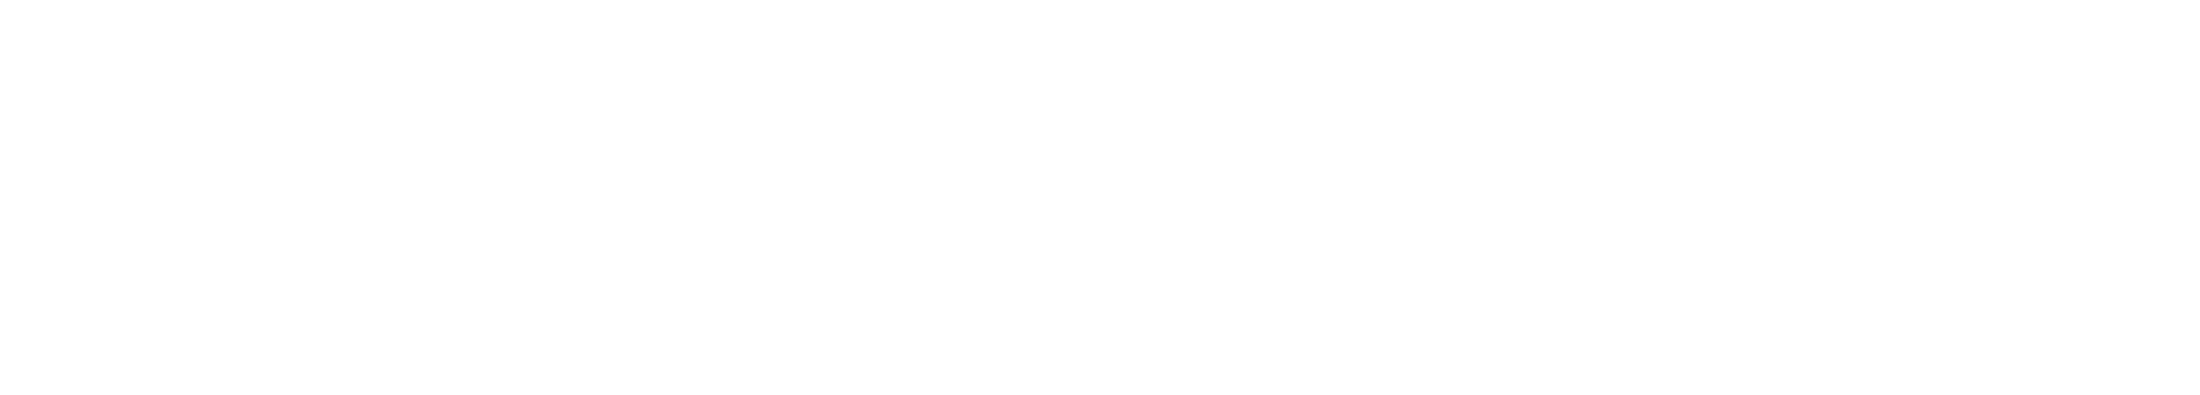  Chesapeake Mermaid logo text in script